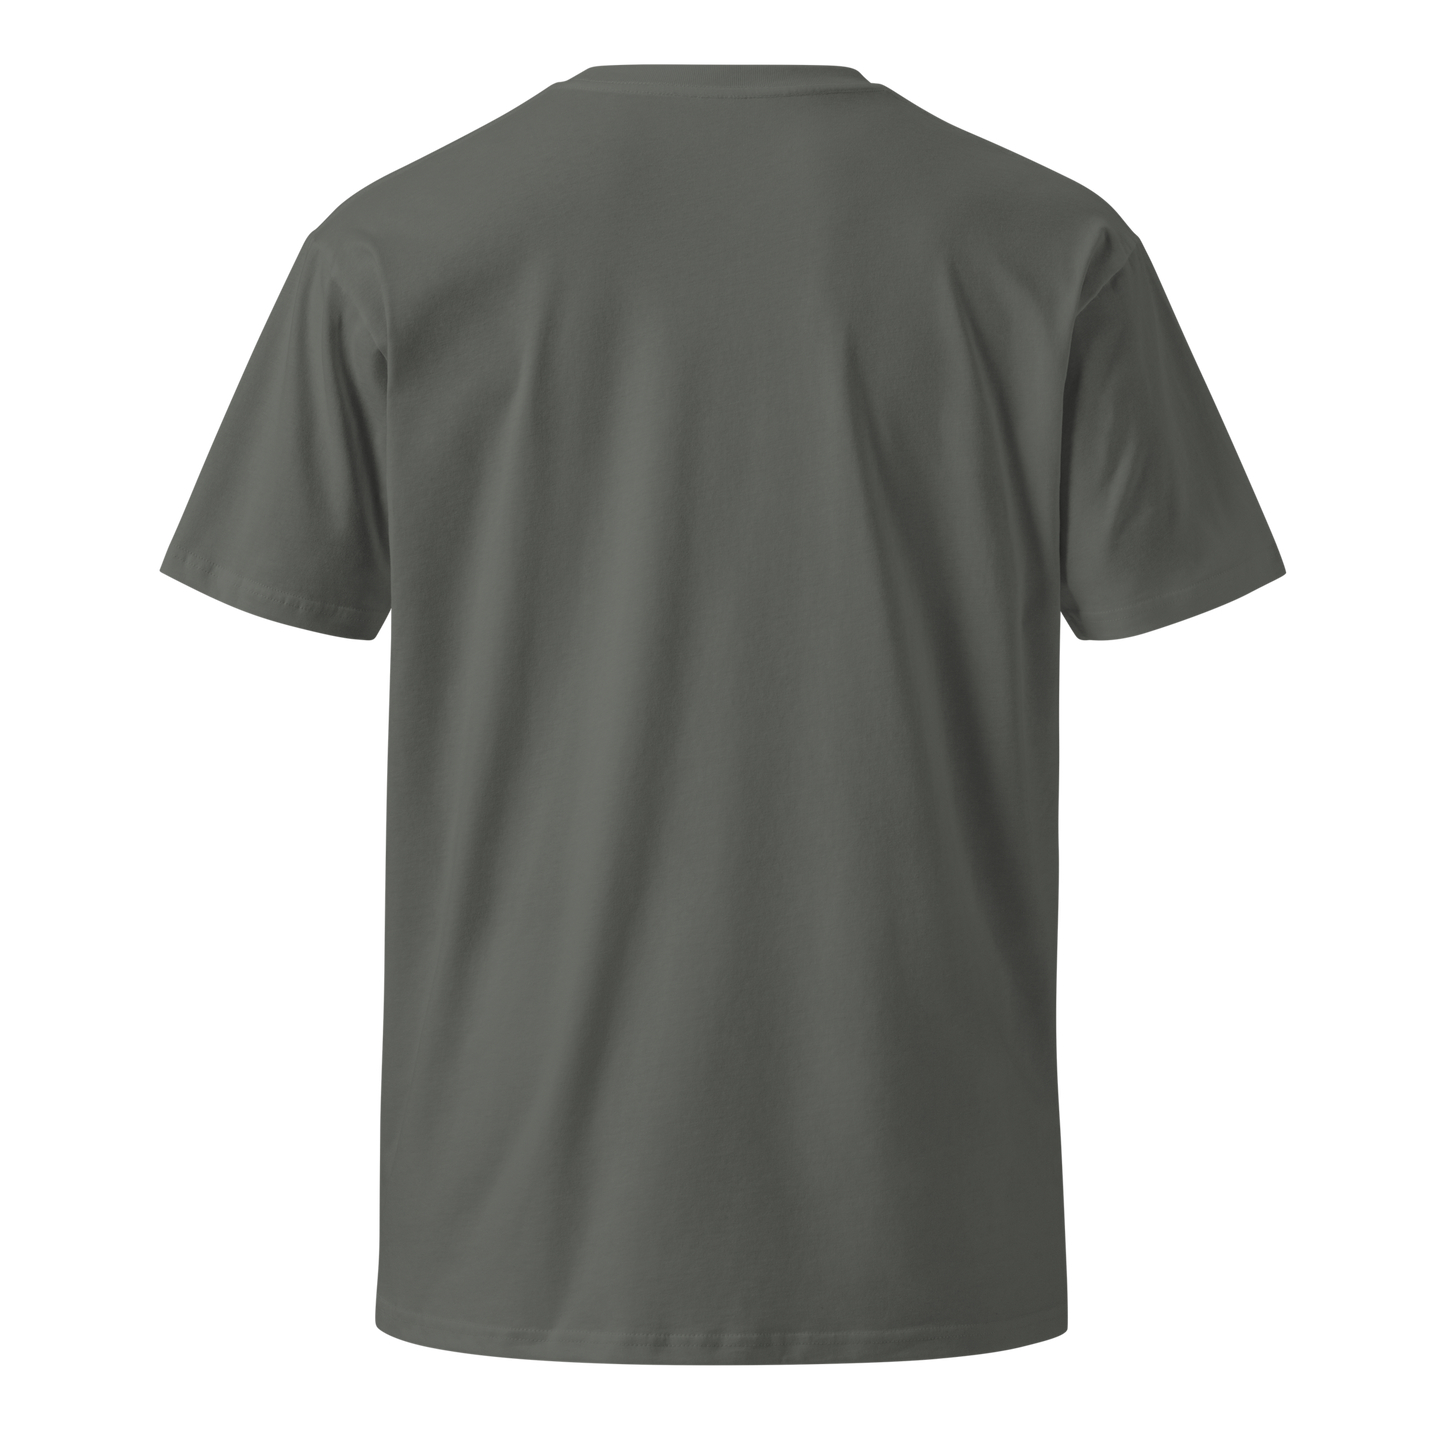 Premium t-shirt "Jacktivator"